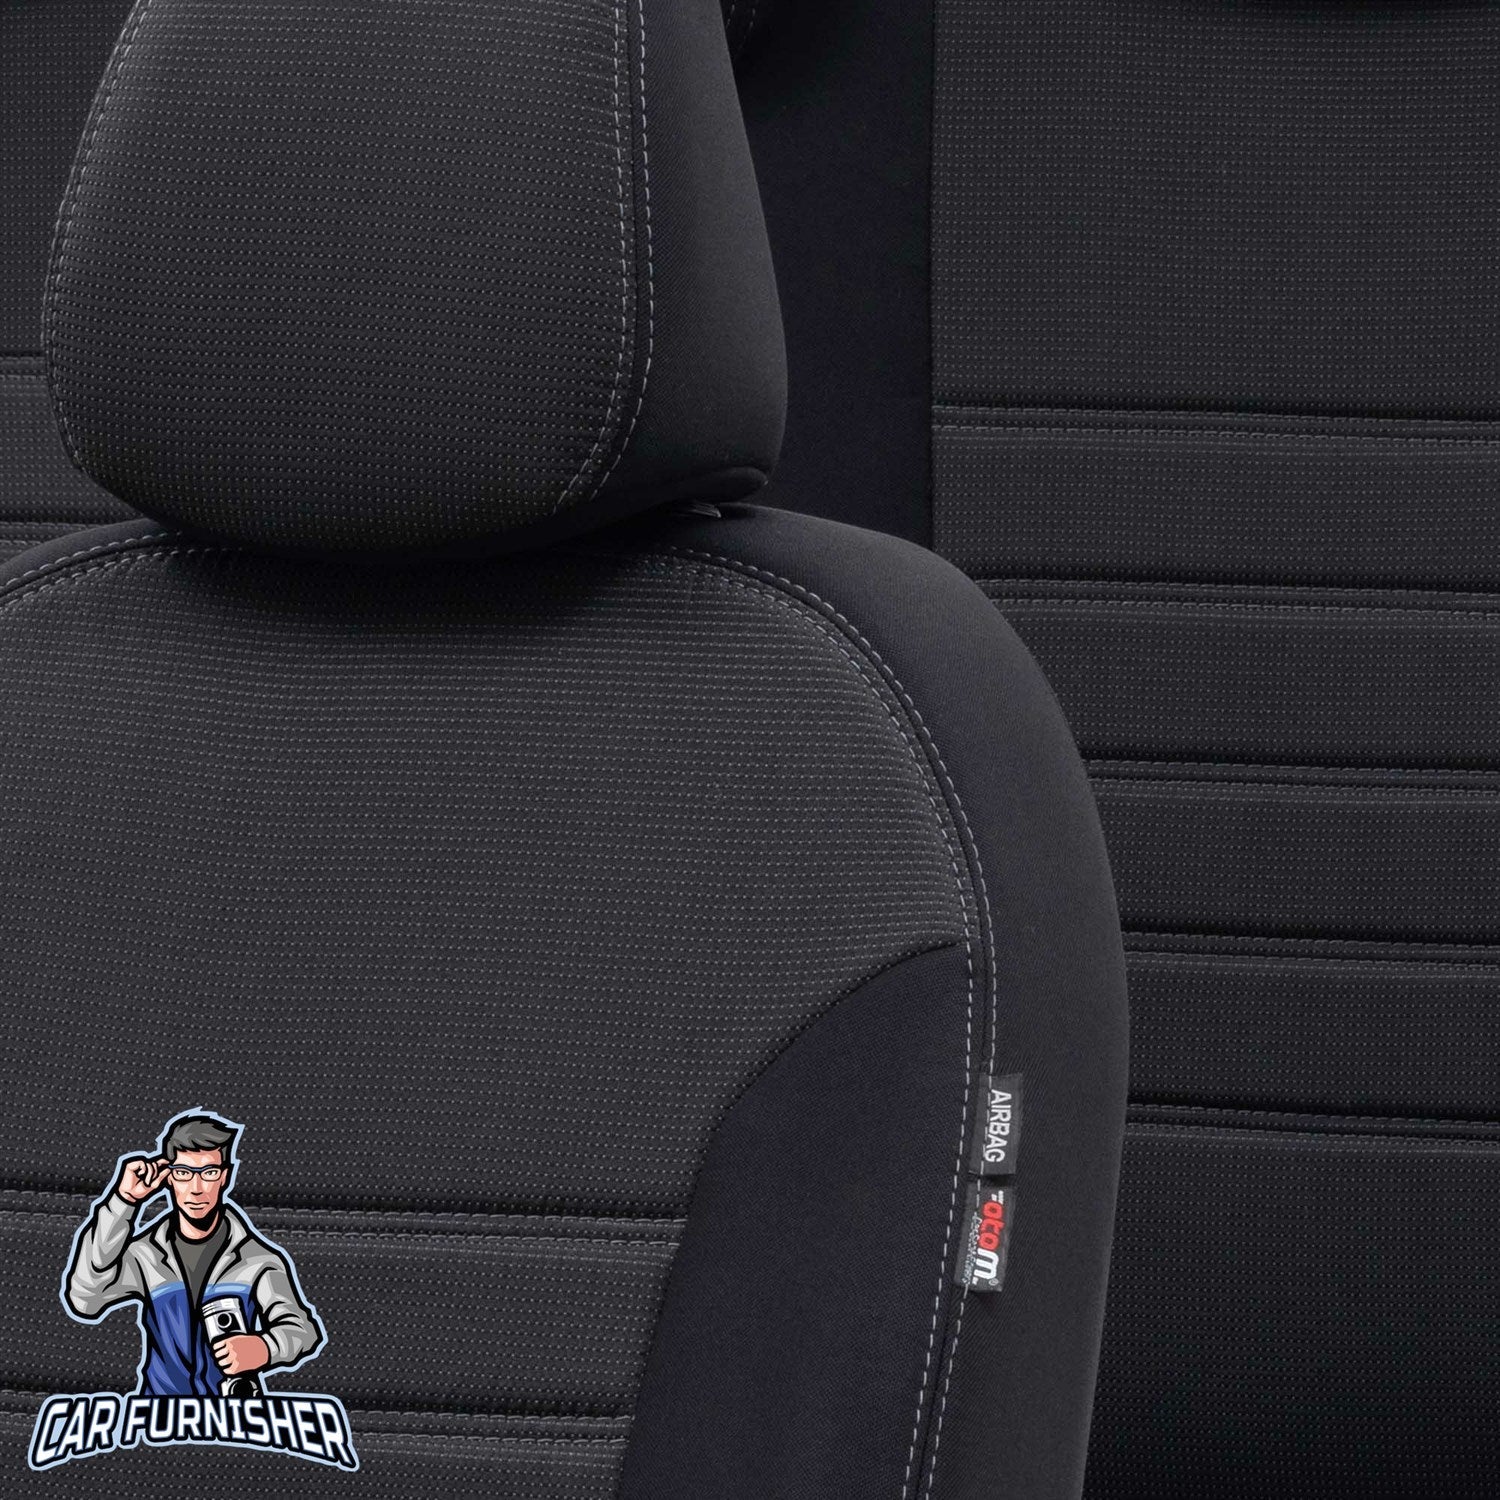 Mazda 626 Seat Cover Original Jacquard Design Dark Gray Jacquard Fabric